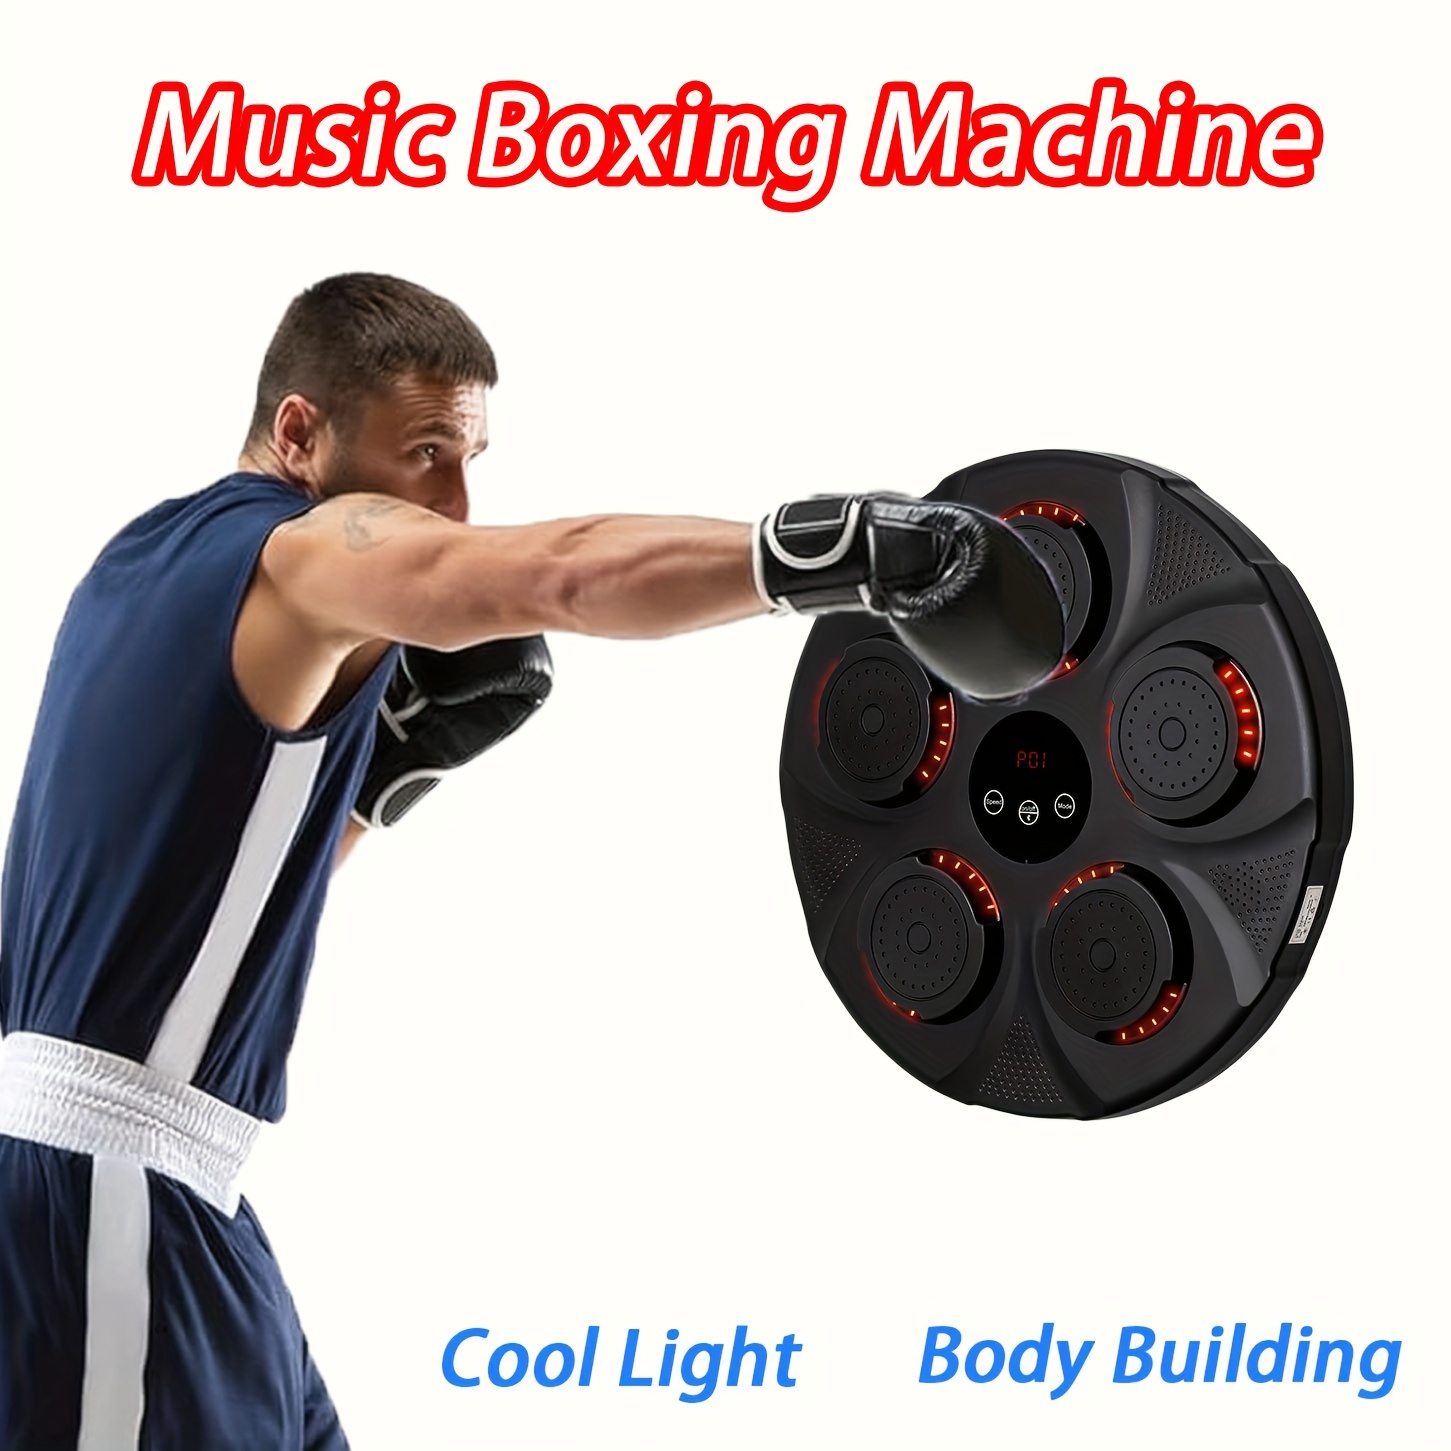 musical boxing machine,smart music boxing machine,boxing machine,music  boxing machine,boxing machine wall mounted,boxing machine with lights,wall